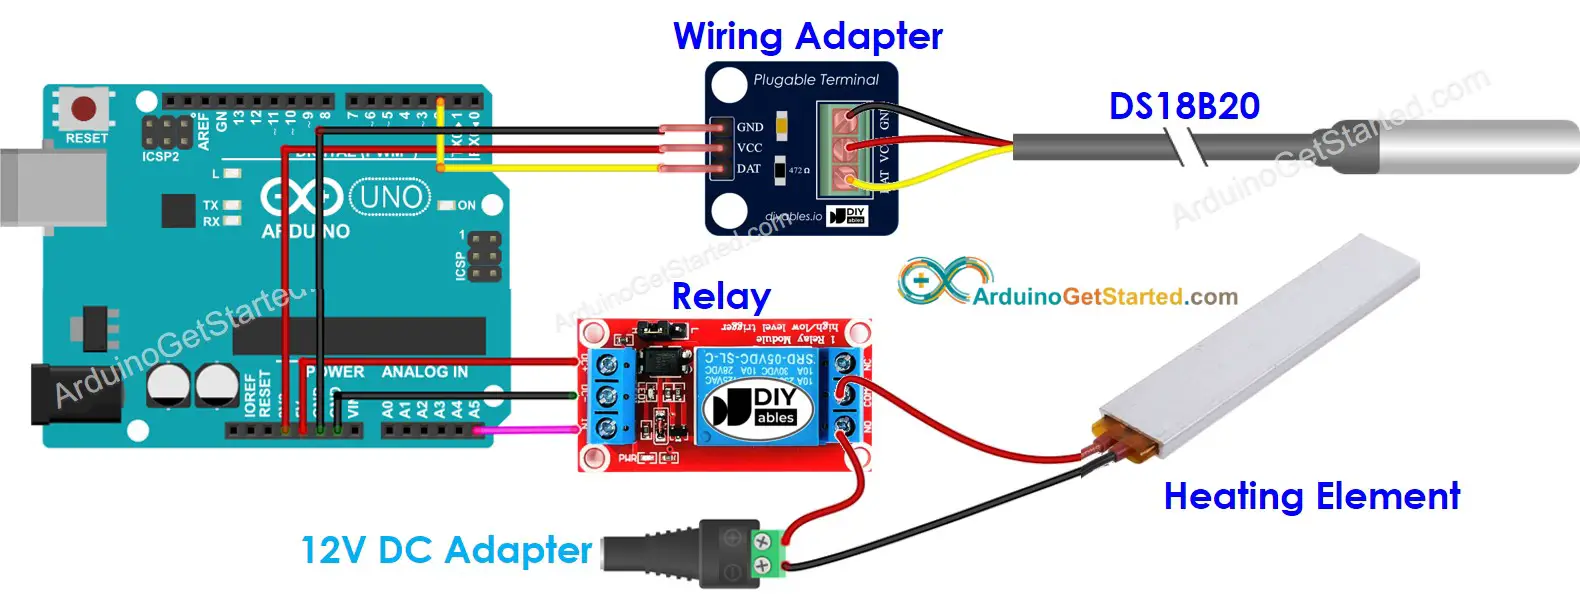 Arduino teamperature controls heating system wiring diagram